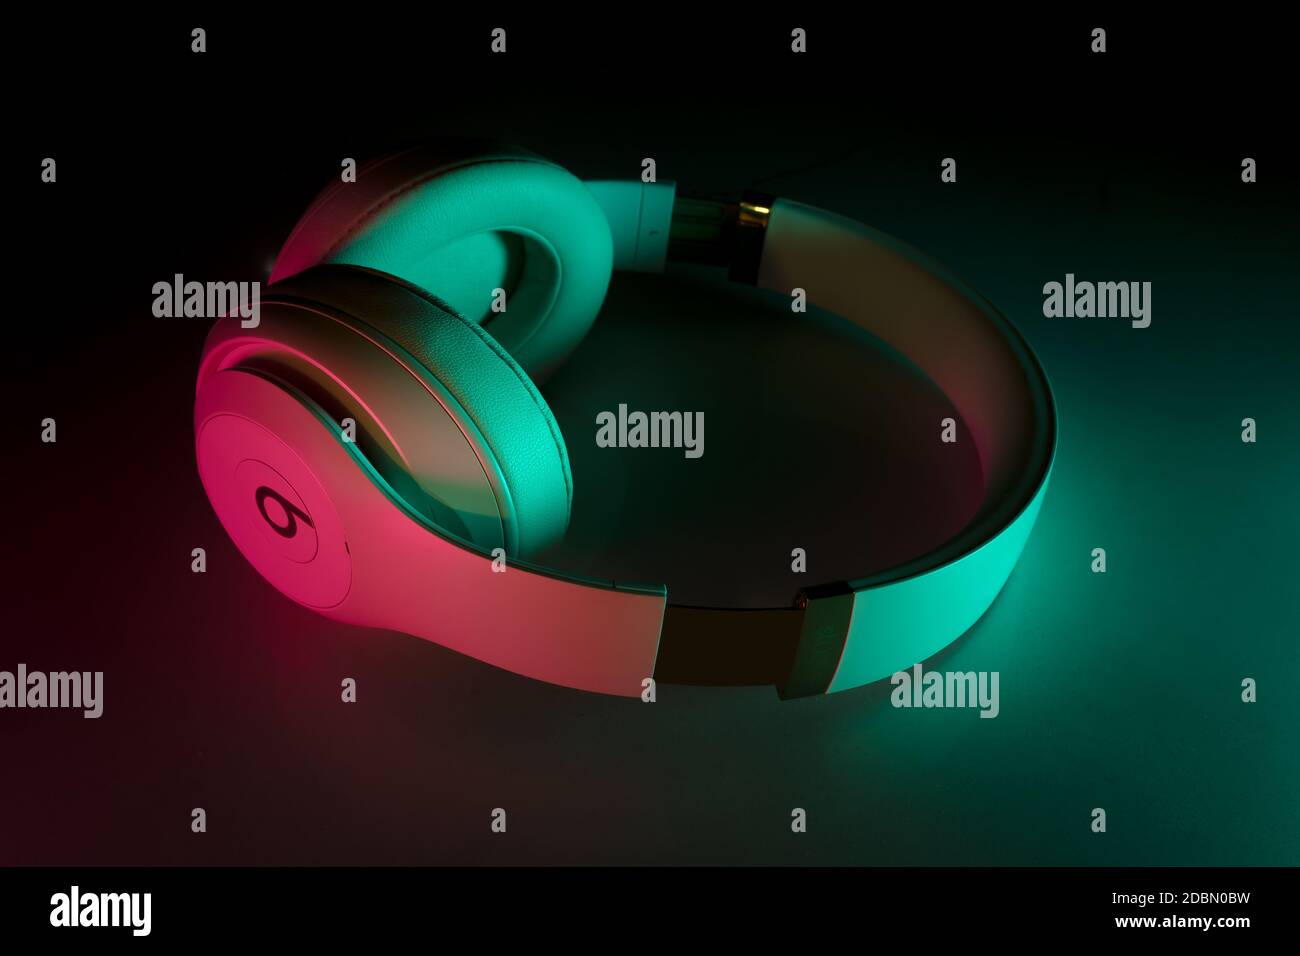 Beats Headphones with RGB lights. Stock Photo